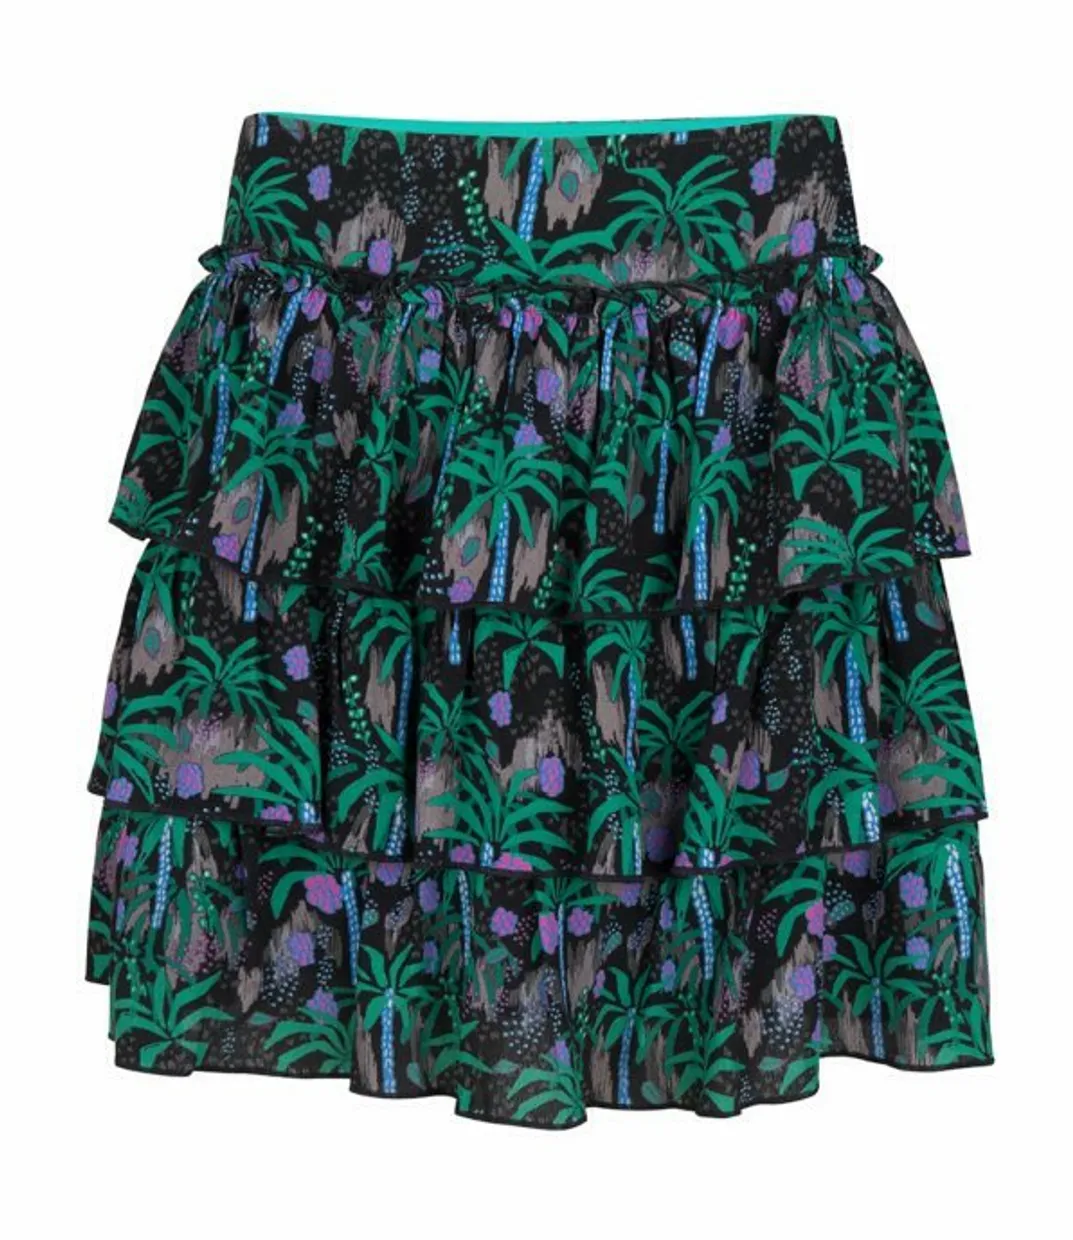 Avery skirt palm tree print